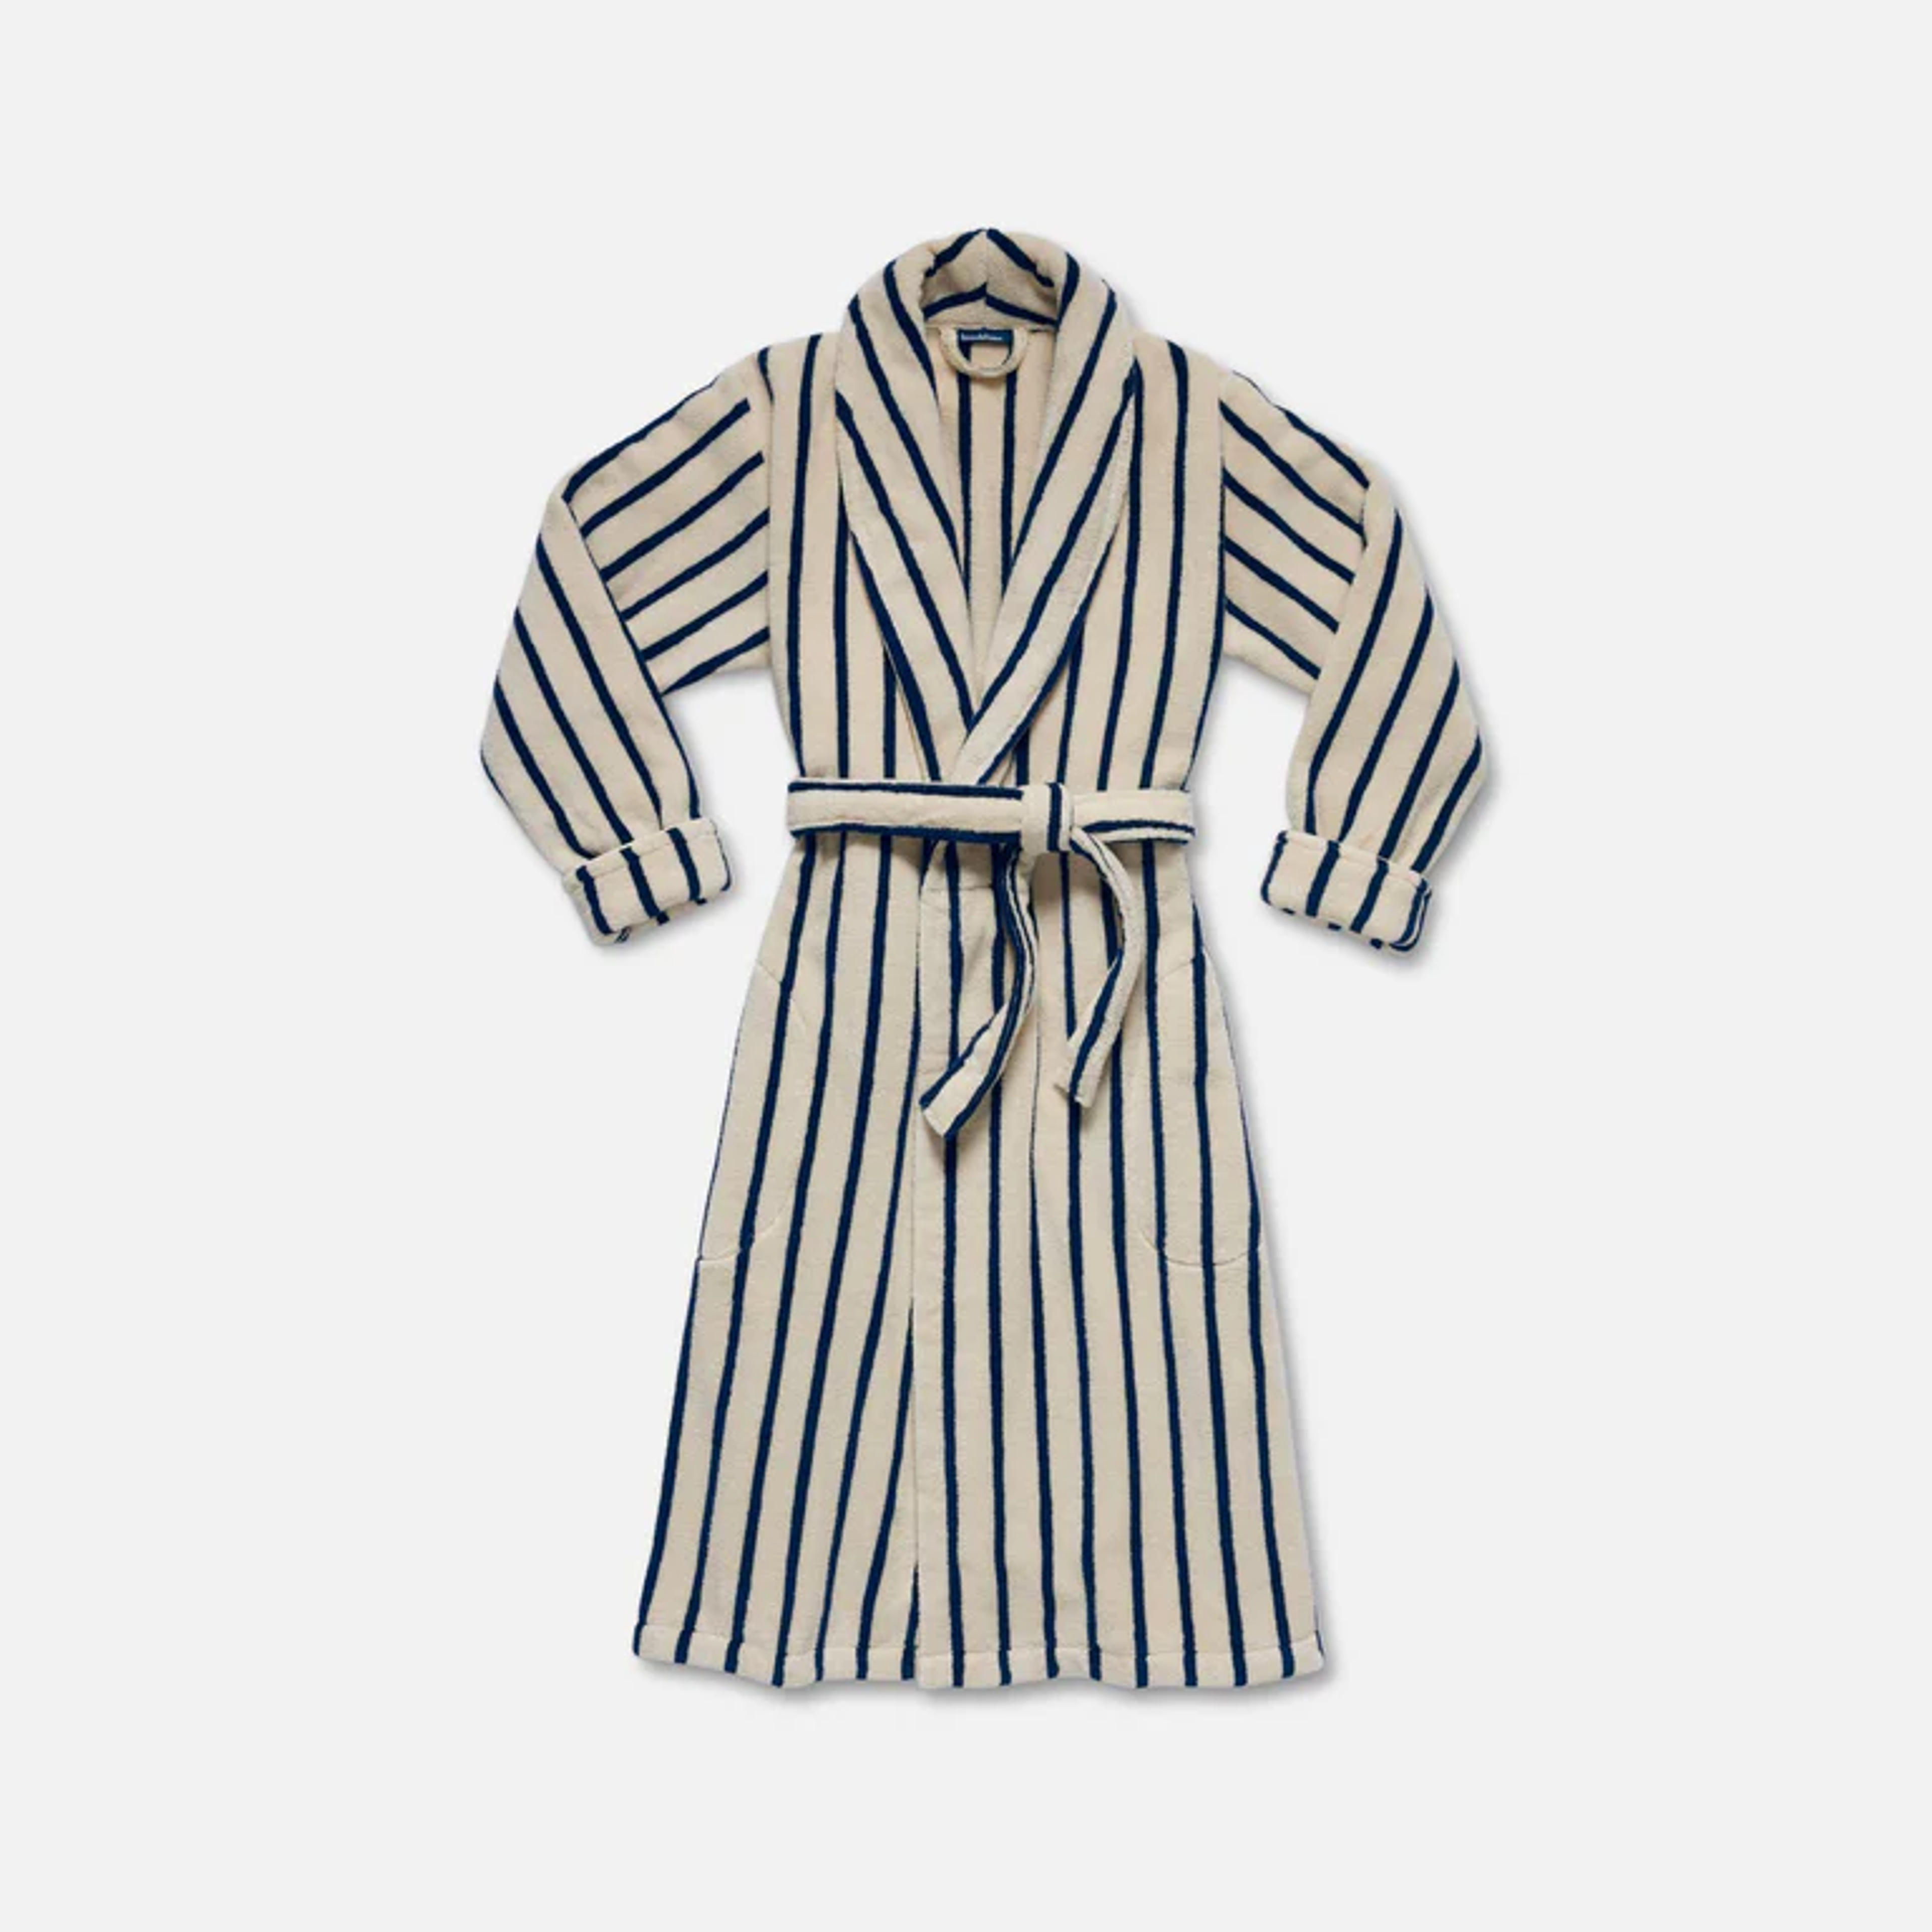 Brooklinen Robe in Midnight Stripe size Large